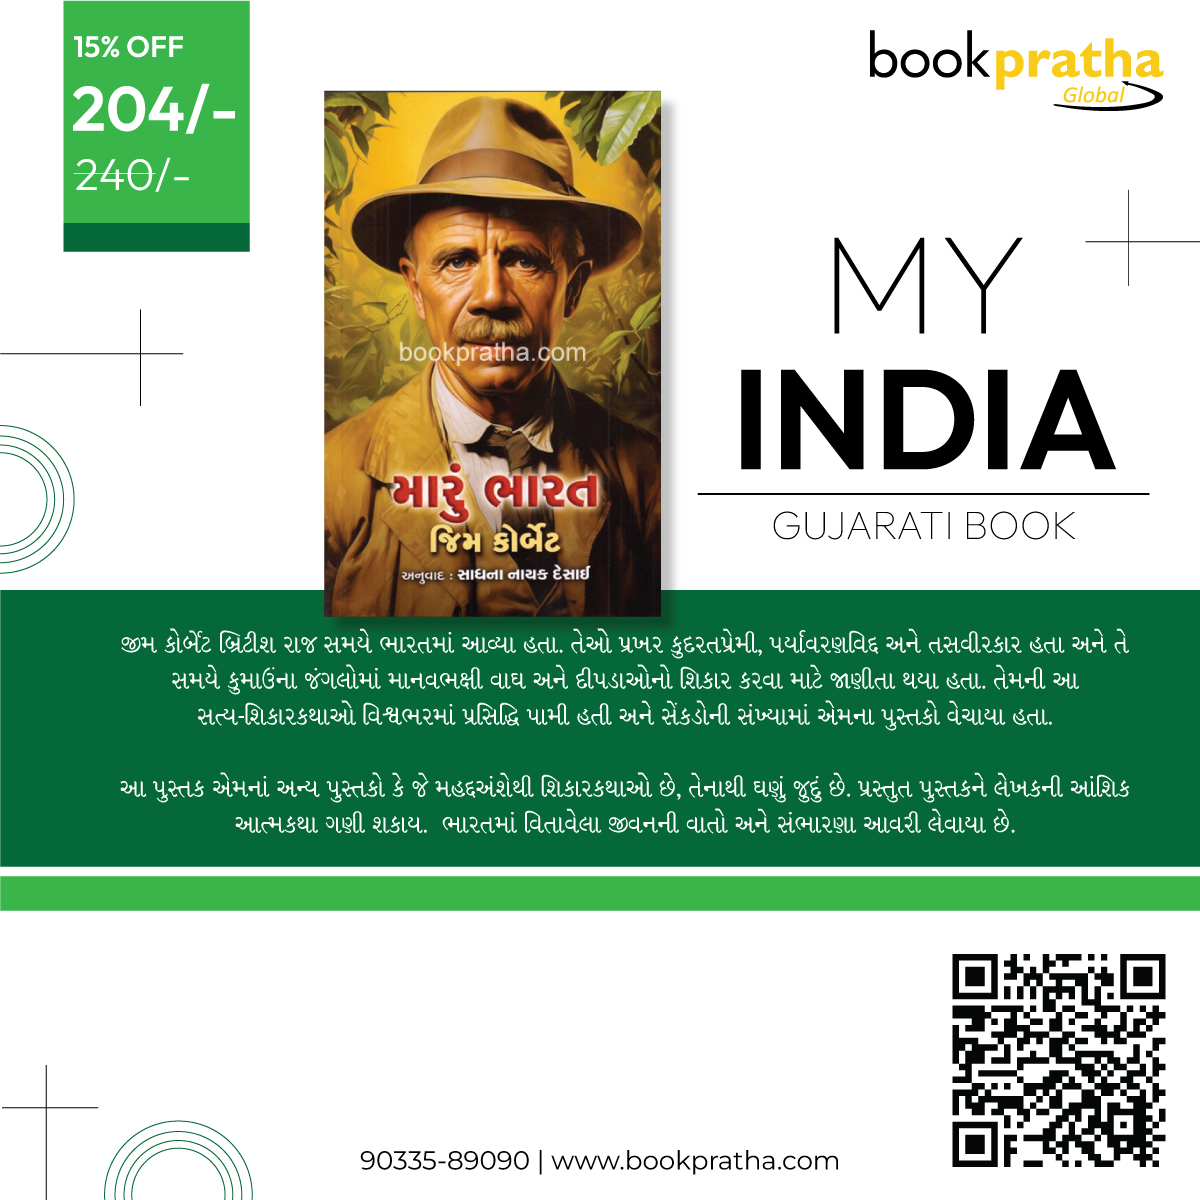 Maru Bharat ~ My India 

Author : Jim Corbett

Contact Us: +91-9033589090

Email: info@bookpratha.com

Order now @ bookpratha.com/bookdetail/Ind…

#books  #gujaratibooks #booksonline #myindia #shoponline #JimCorbett #gujaratibook #bookpratha #marubharat